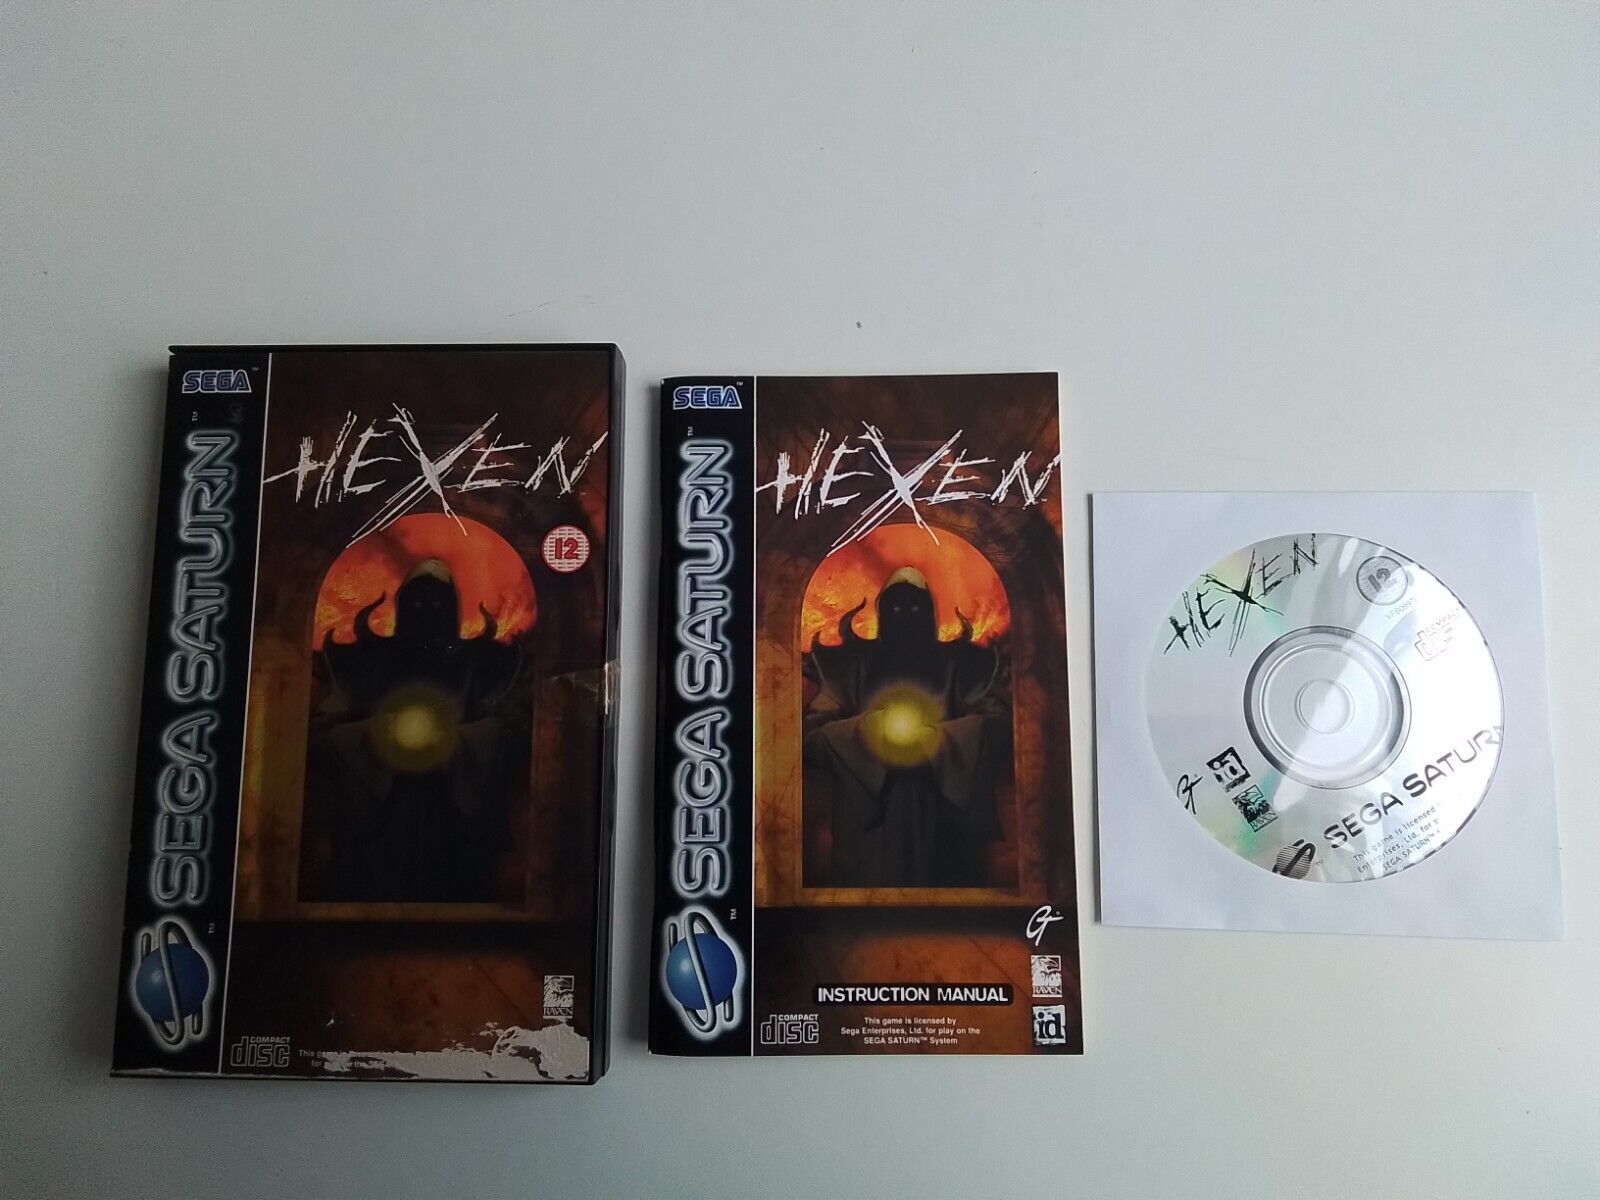 Hexen Complet sur SEGA Saturn !!!!